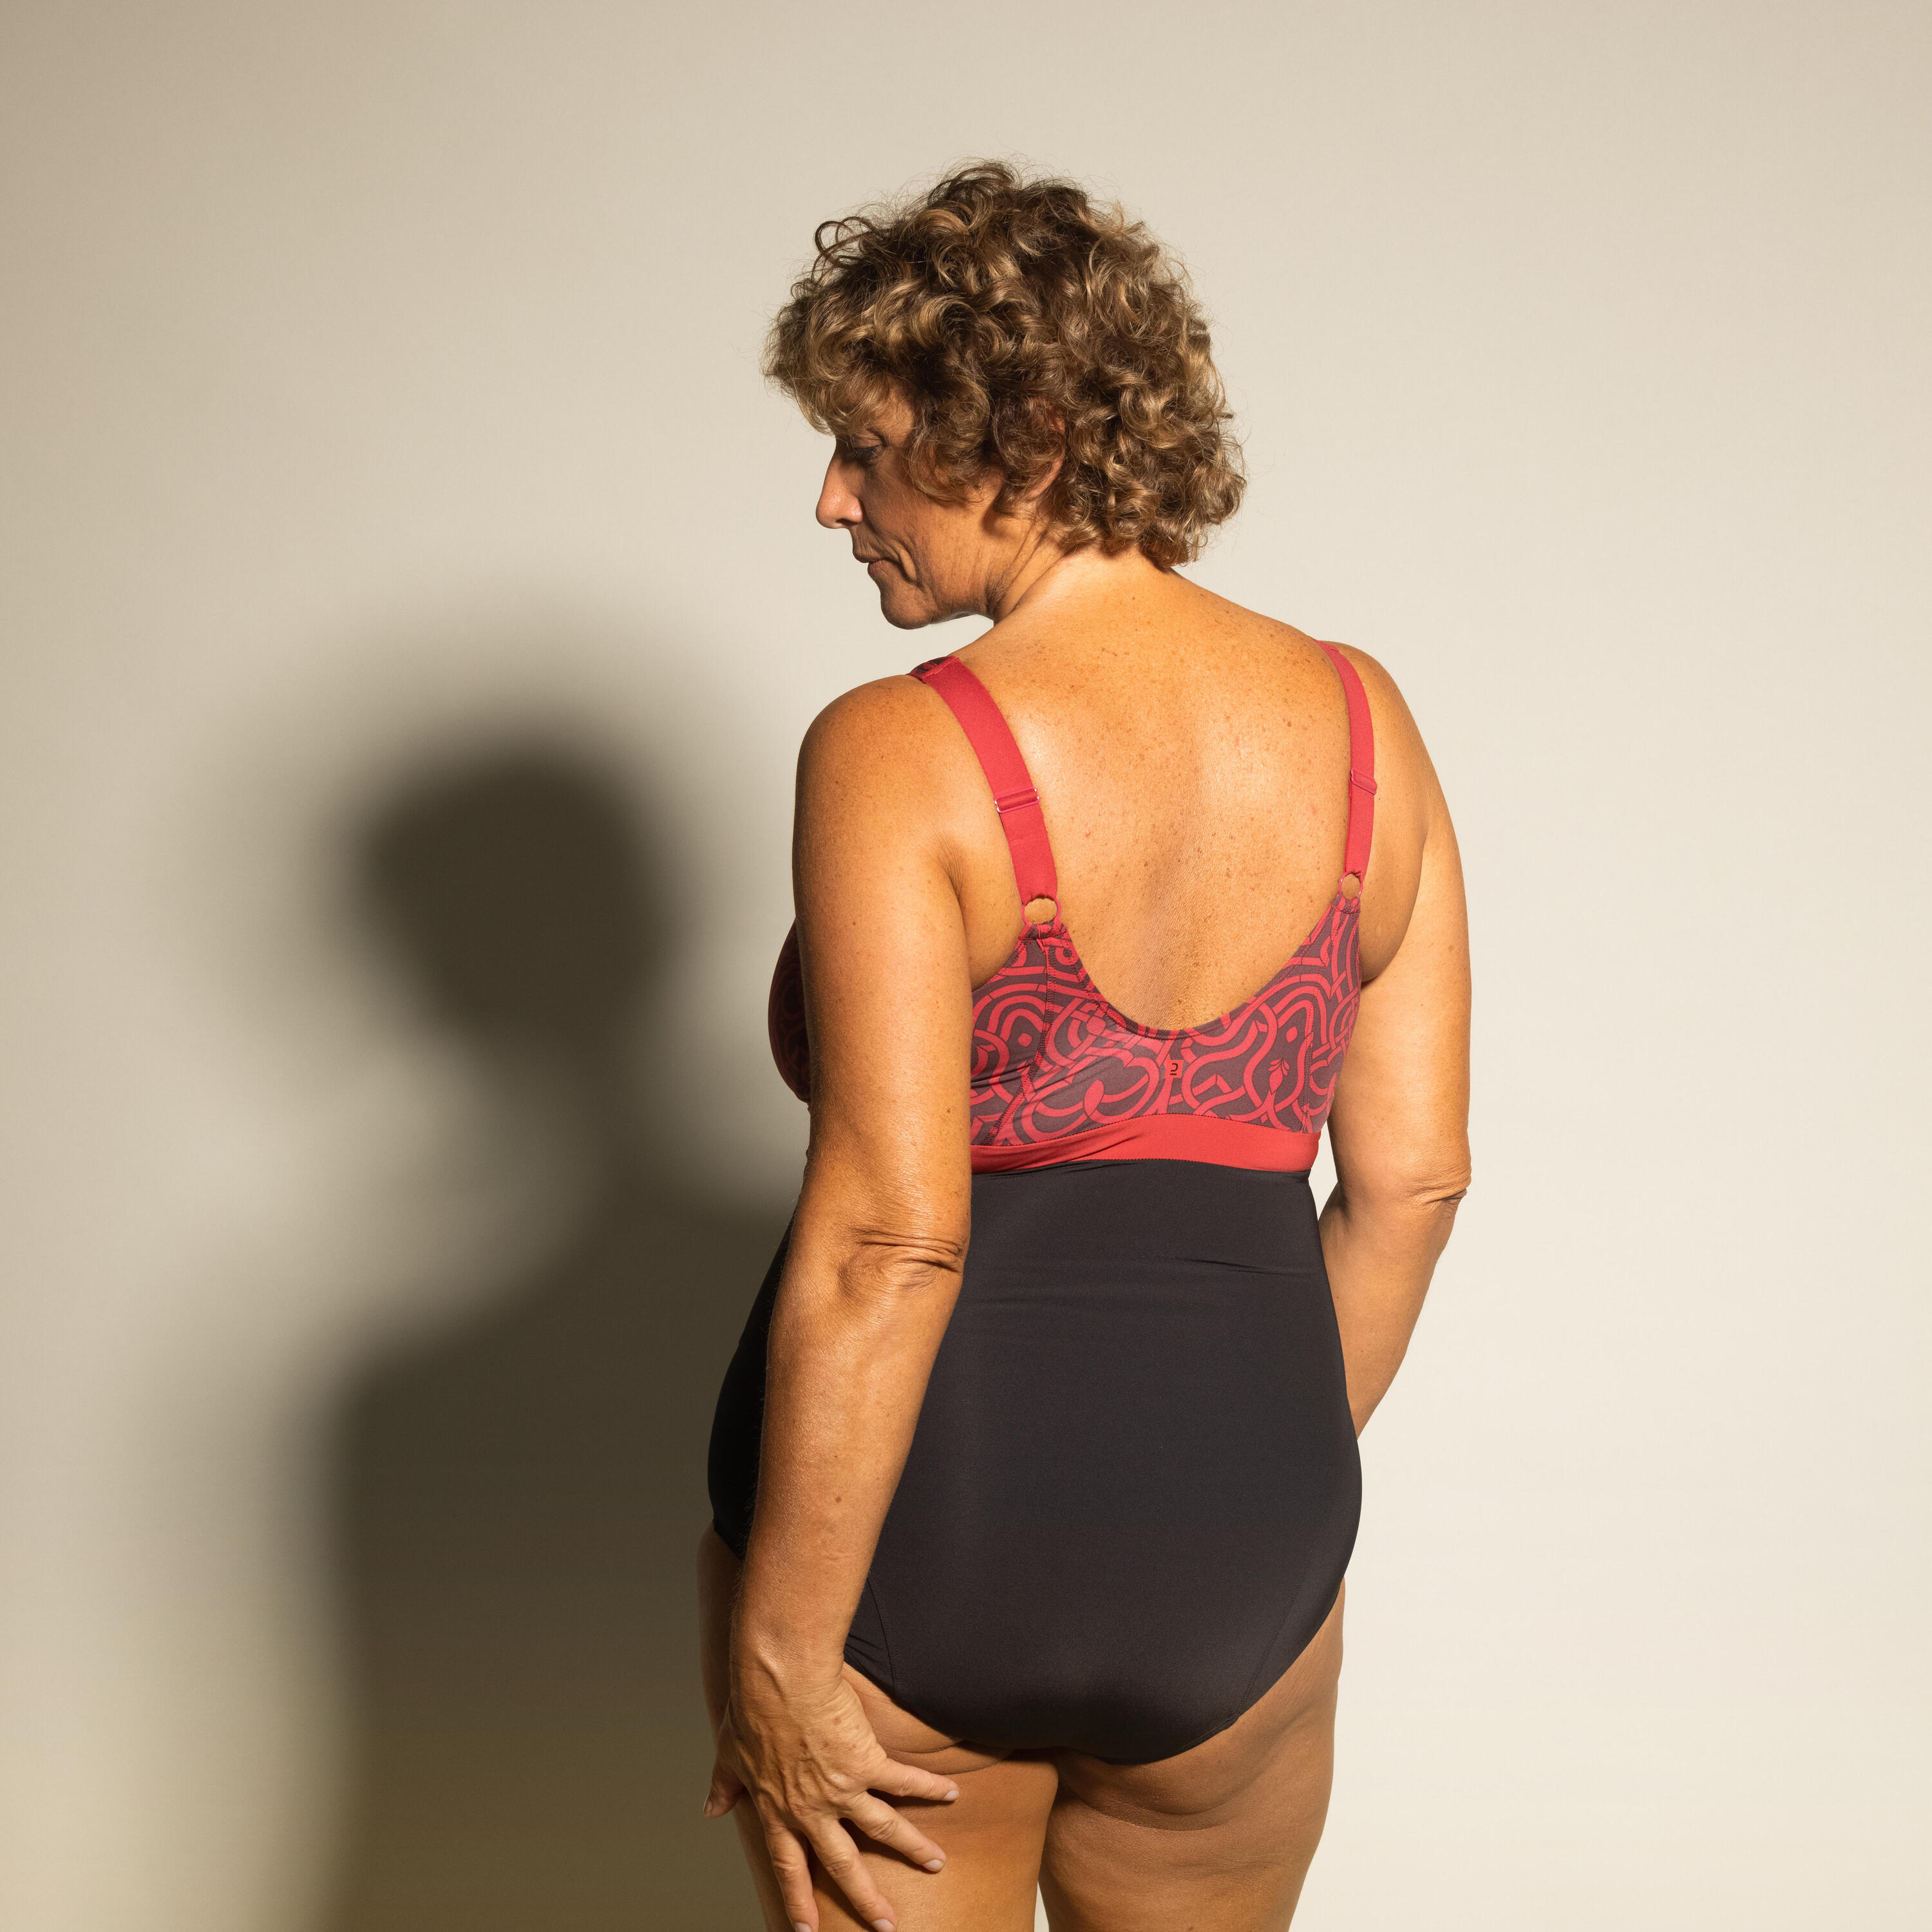 Women's 1-piece aquafitness swimsuit Cera black burgundy. Cup size D/E 4/12